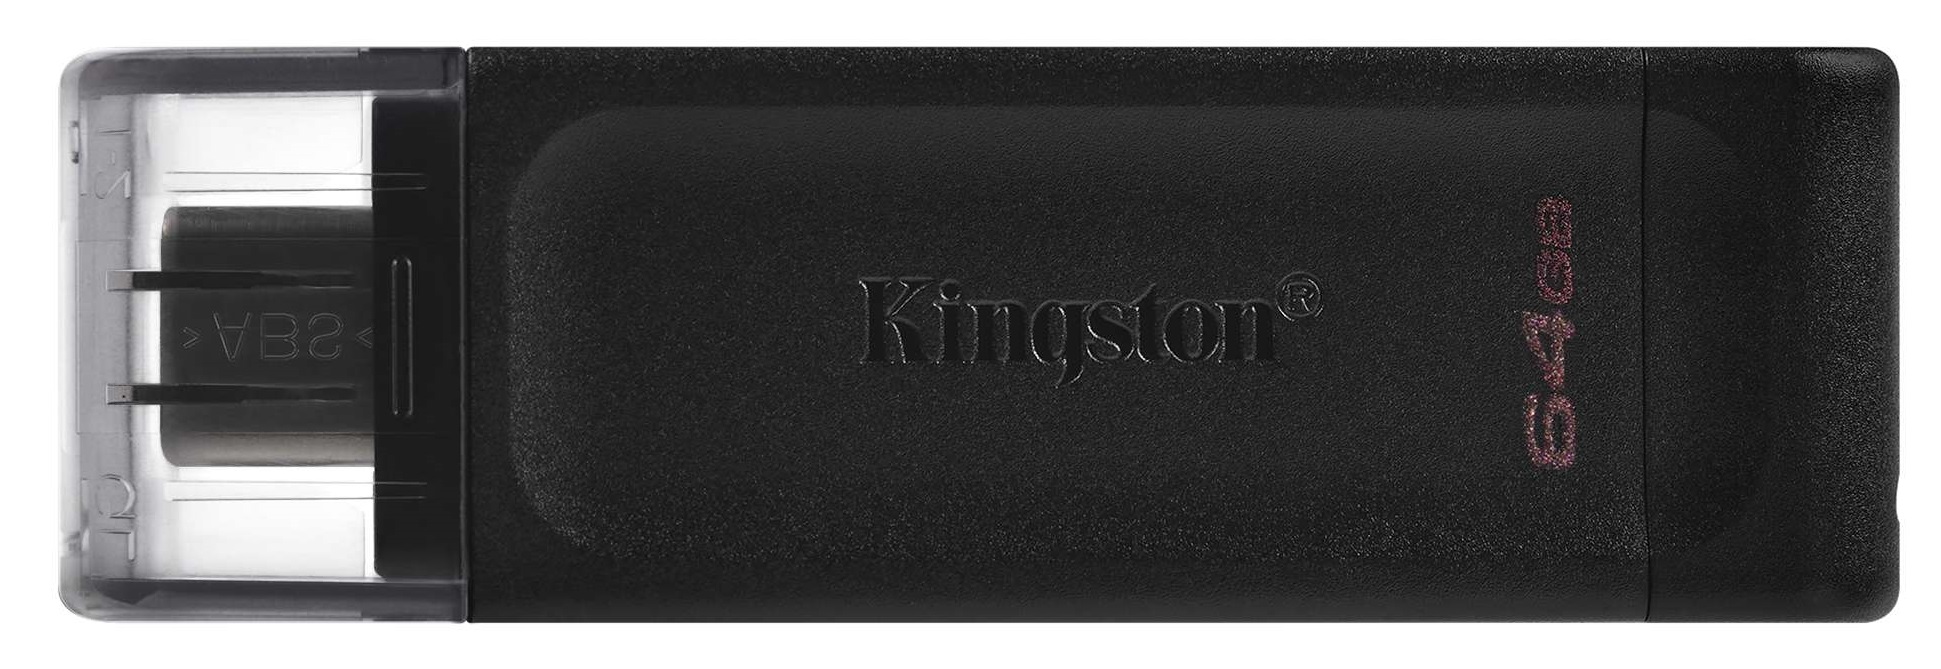 USB-накопитель 64GB KINGSTON DataTraveler 70 Type-C USB 3.2 (DT70/64GB) в Киеве